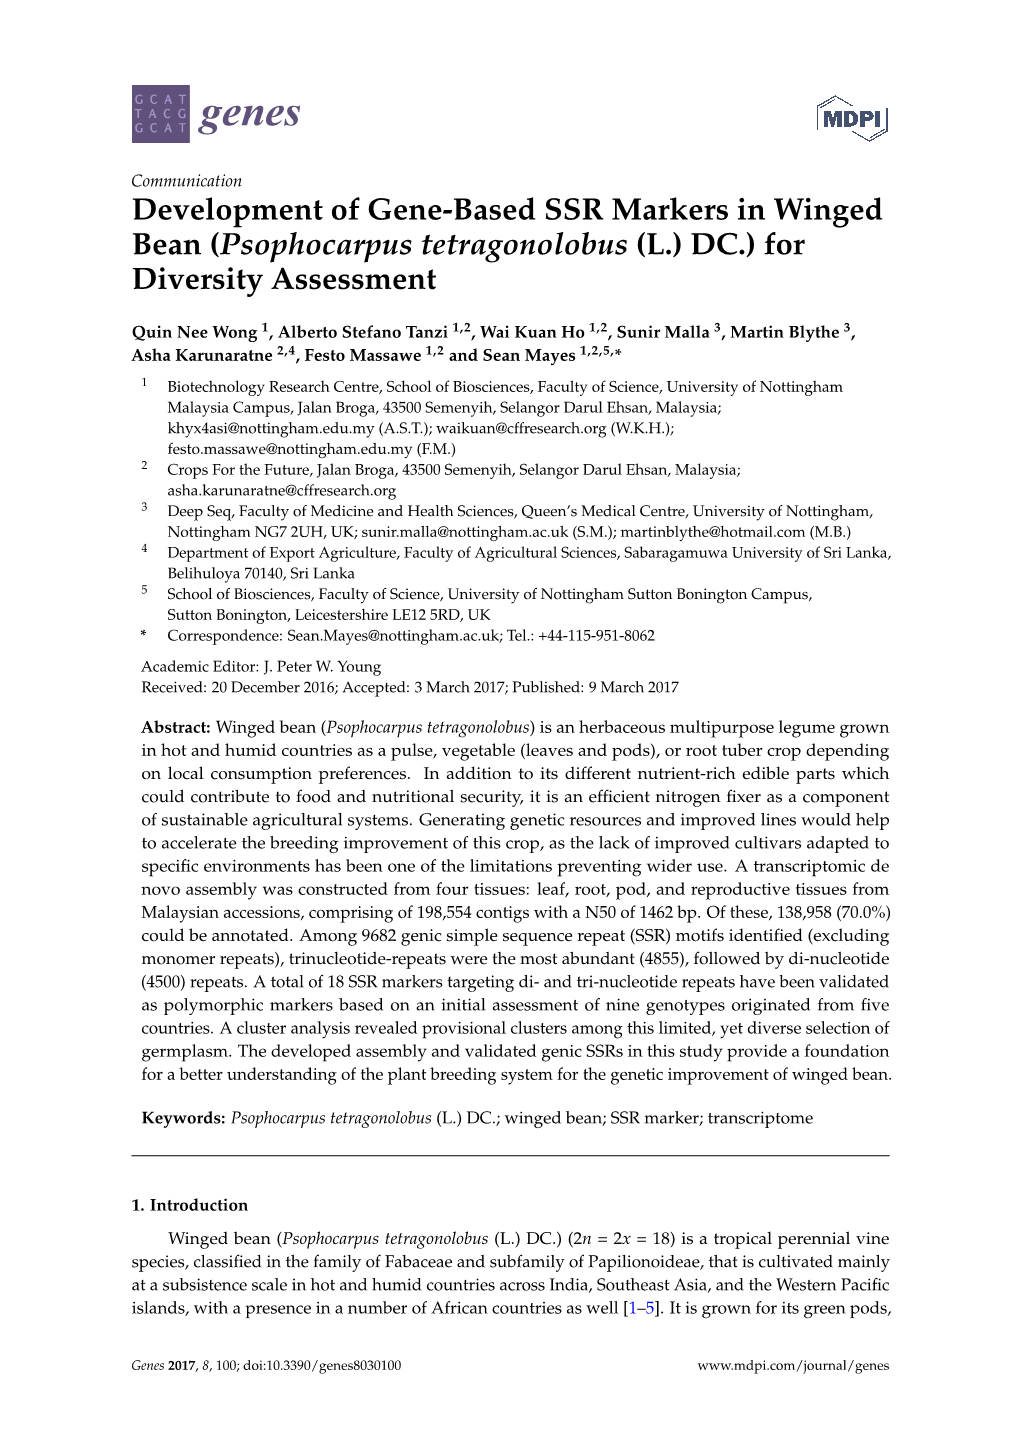 Development of Gene-Based SSR Markers in Winged Bean (Psophocarpus Tetragonolobus (L.) DC.) for Diversity Assessment